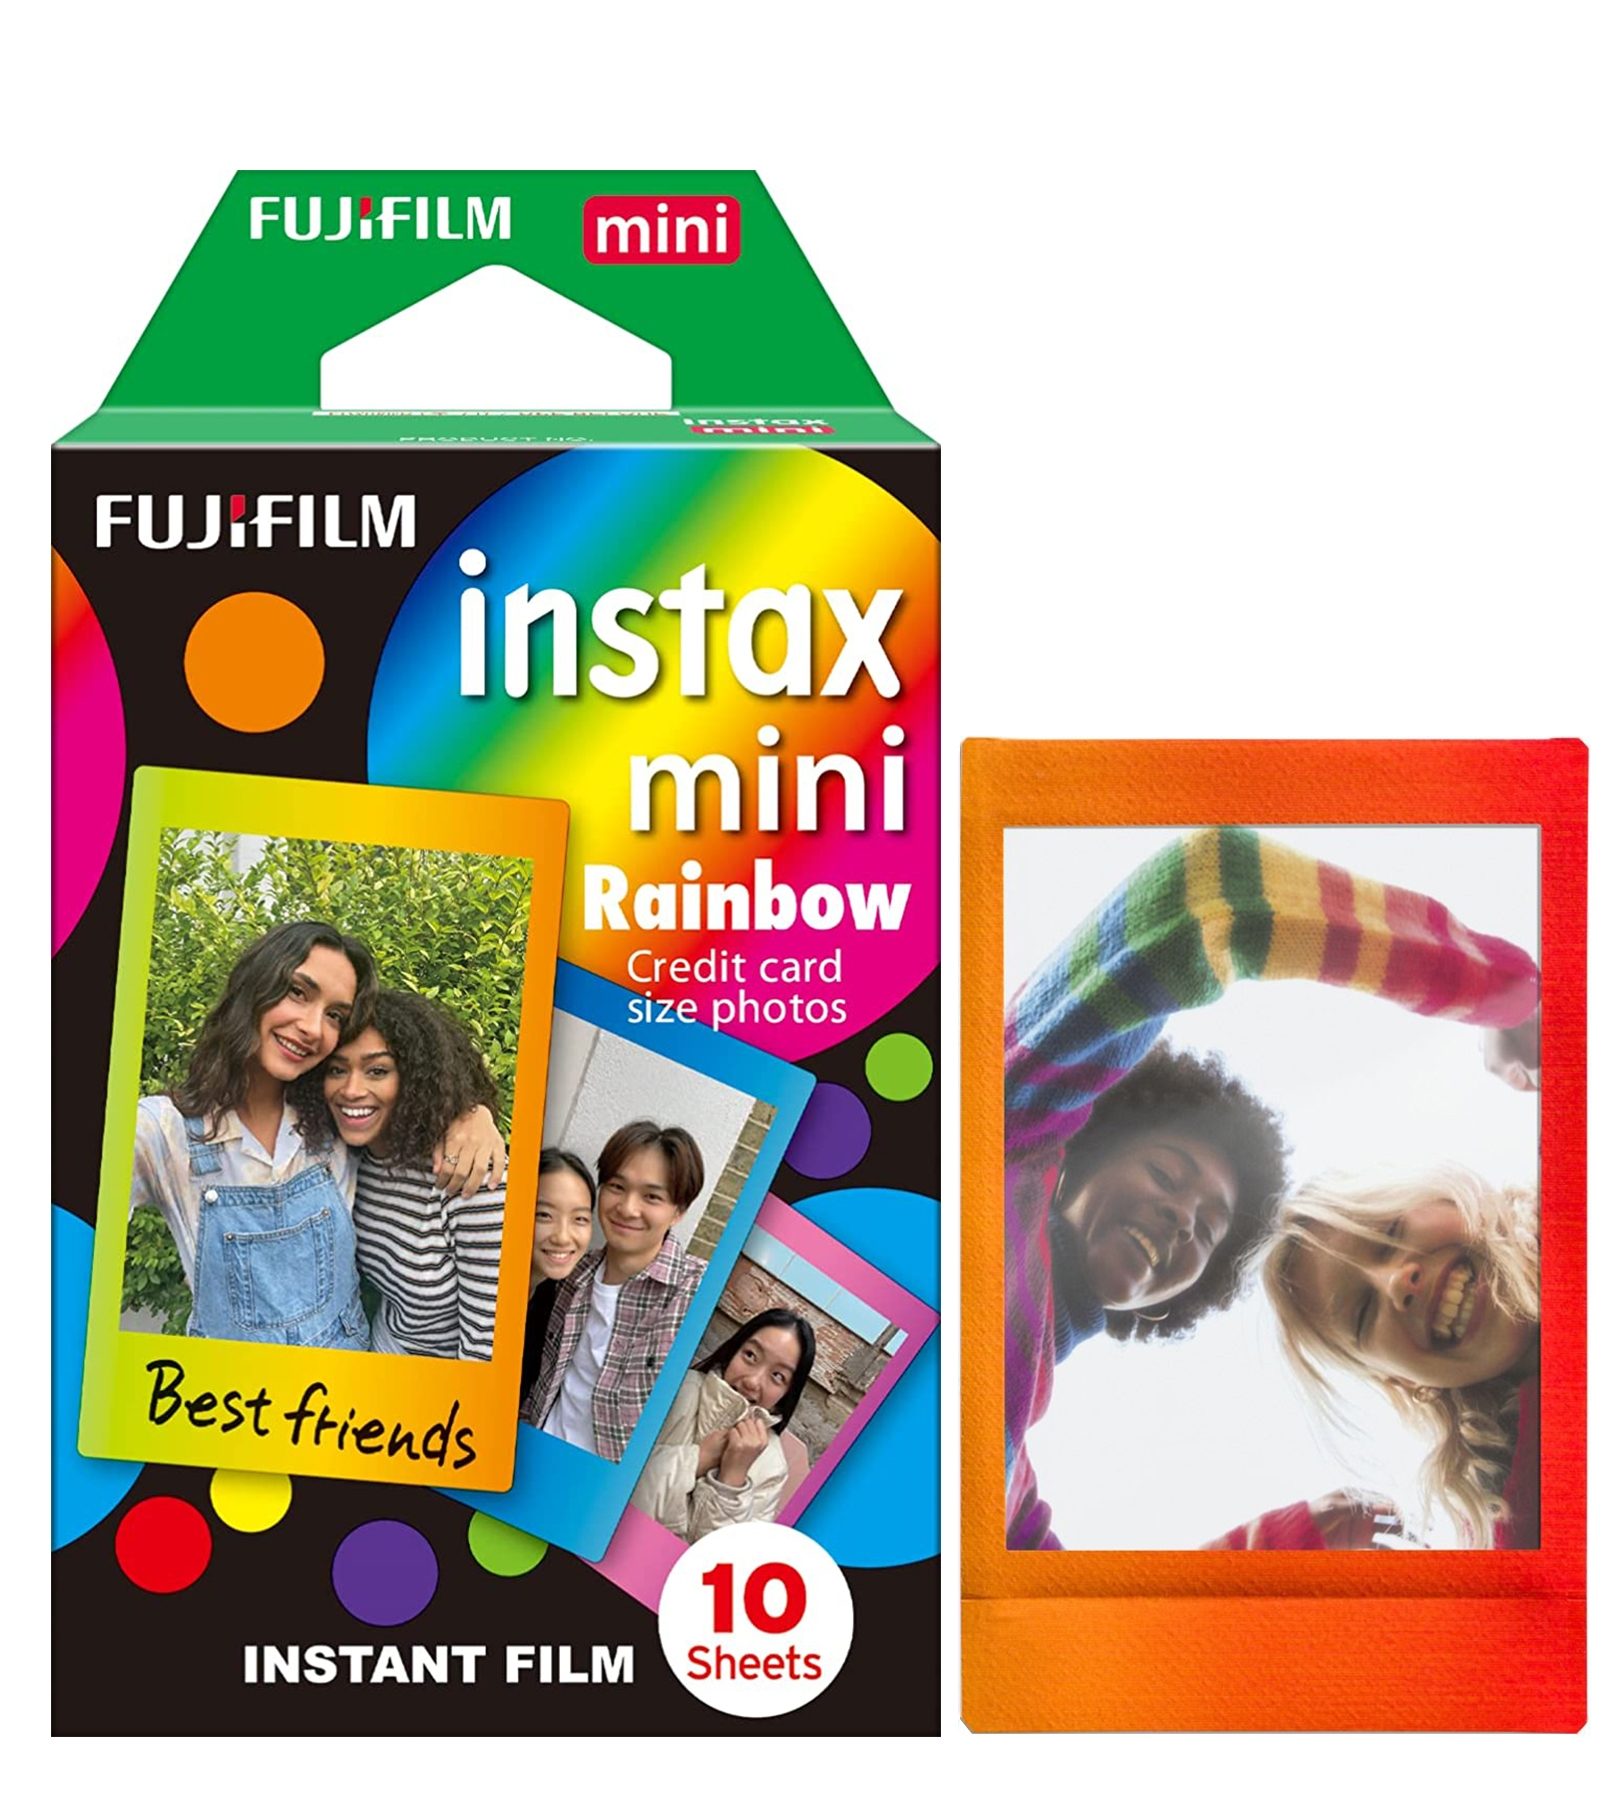 INSTAX MINI RAINBOW FILM PK OF 10EXP